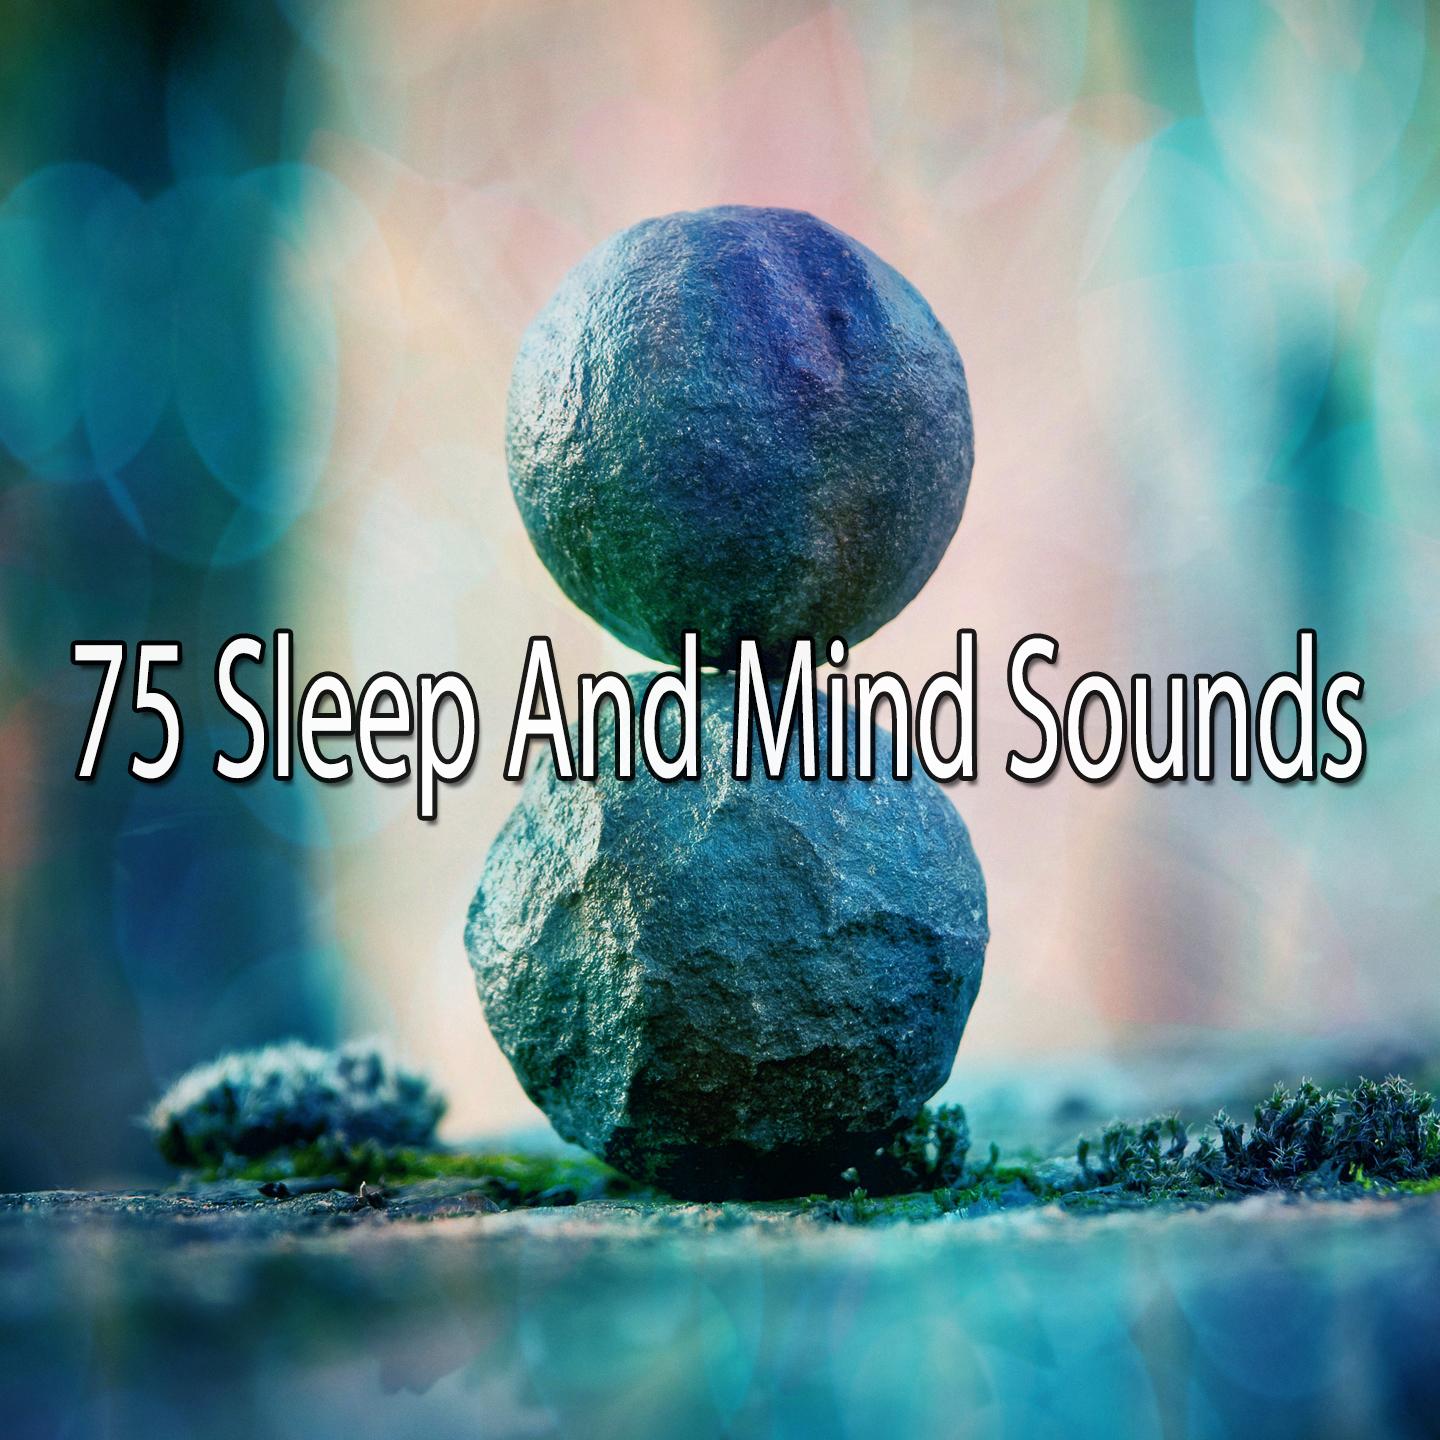 75 Sleep and Mind Sounds